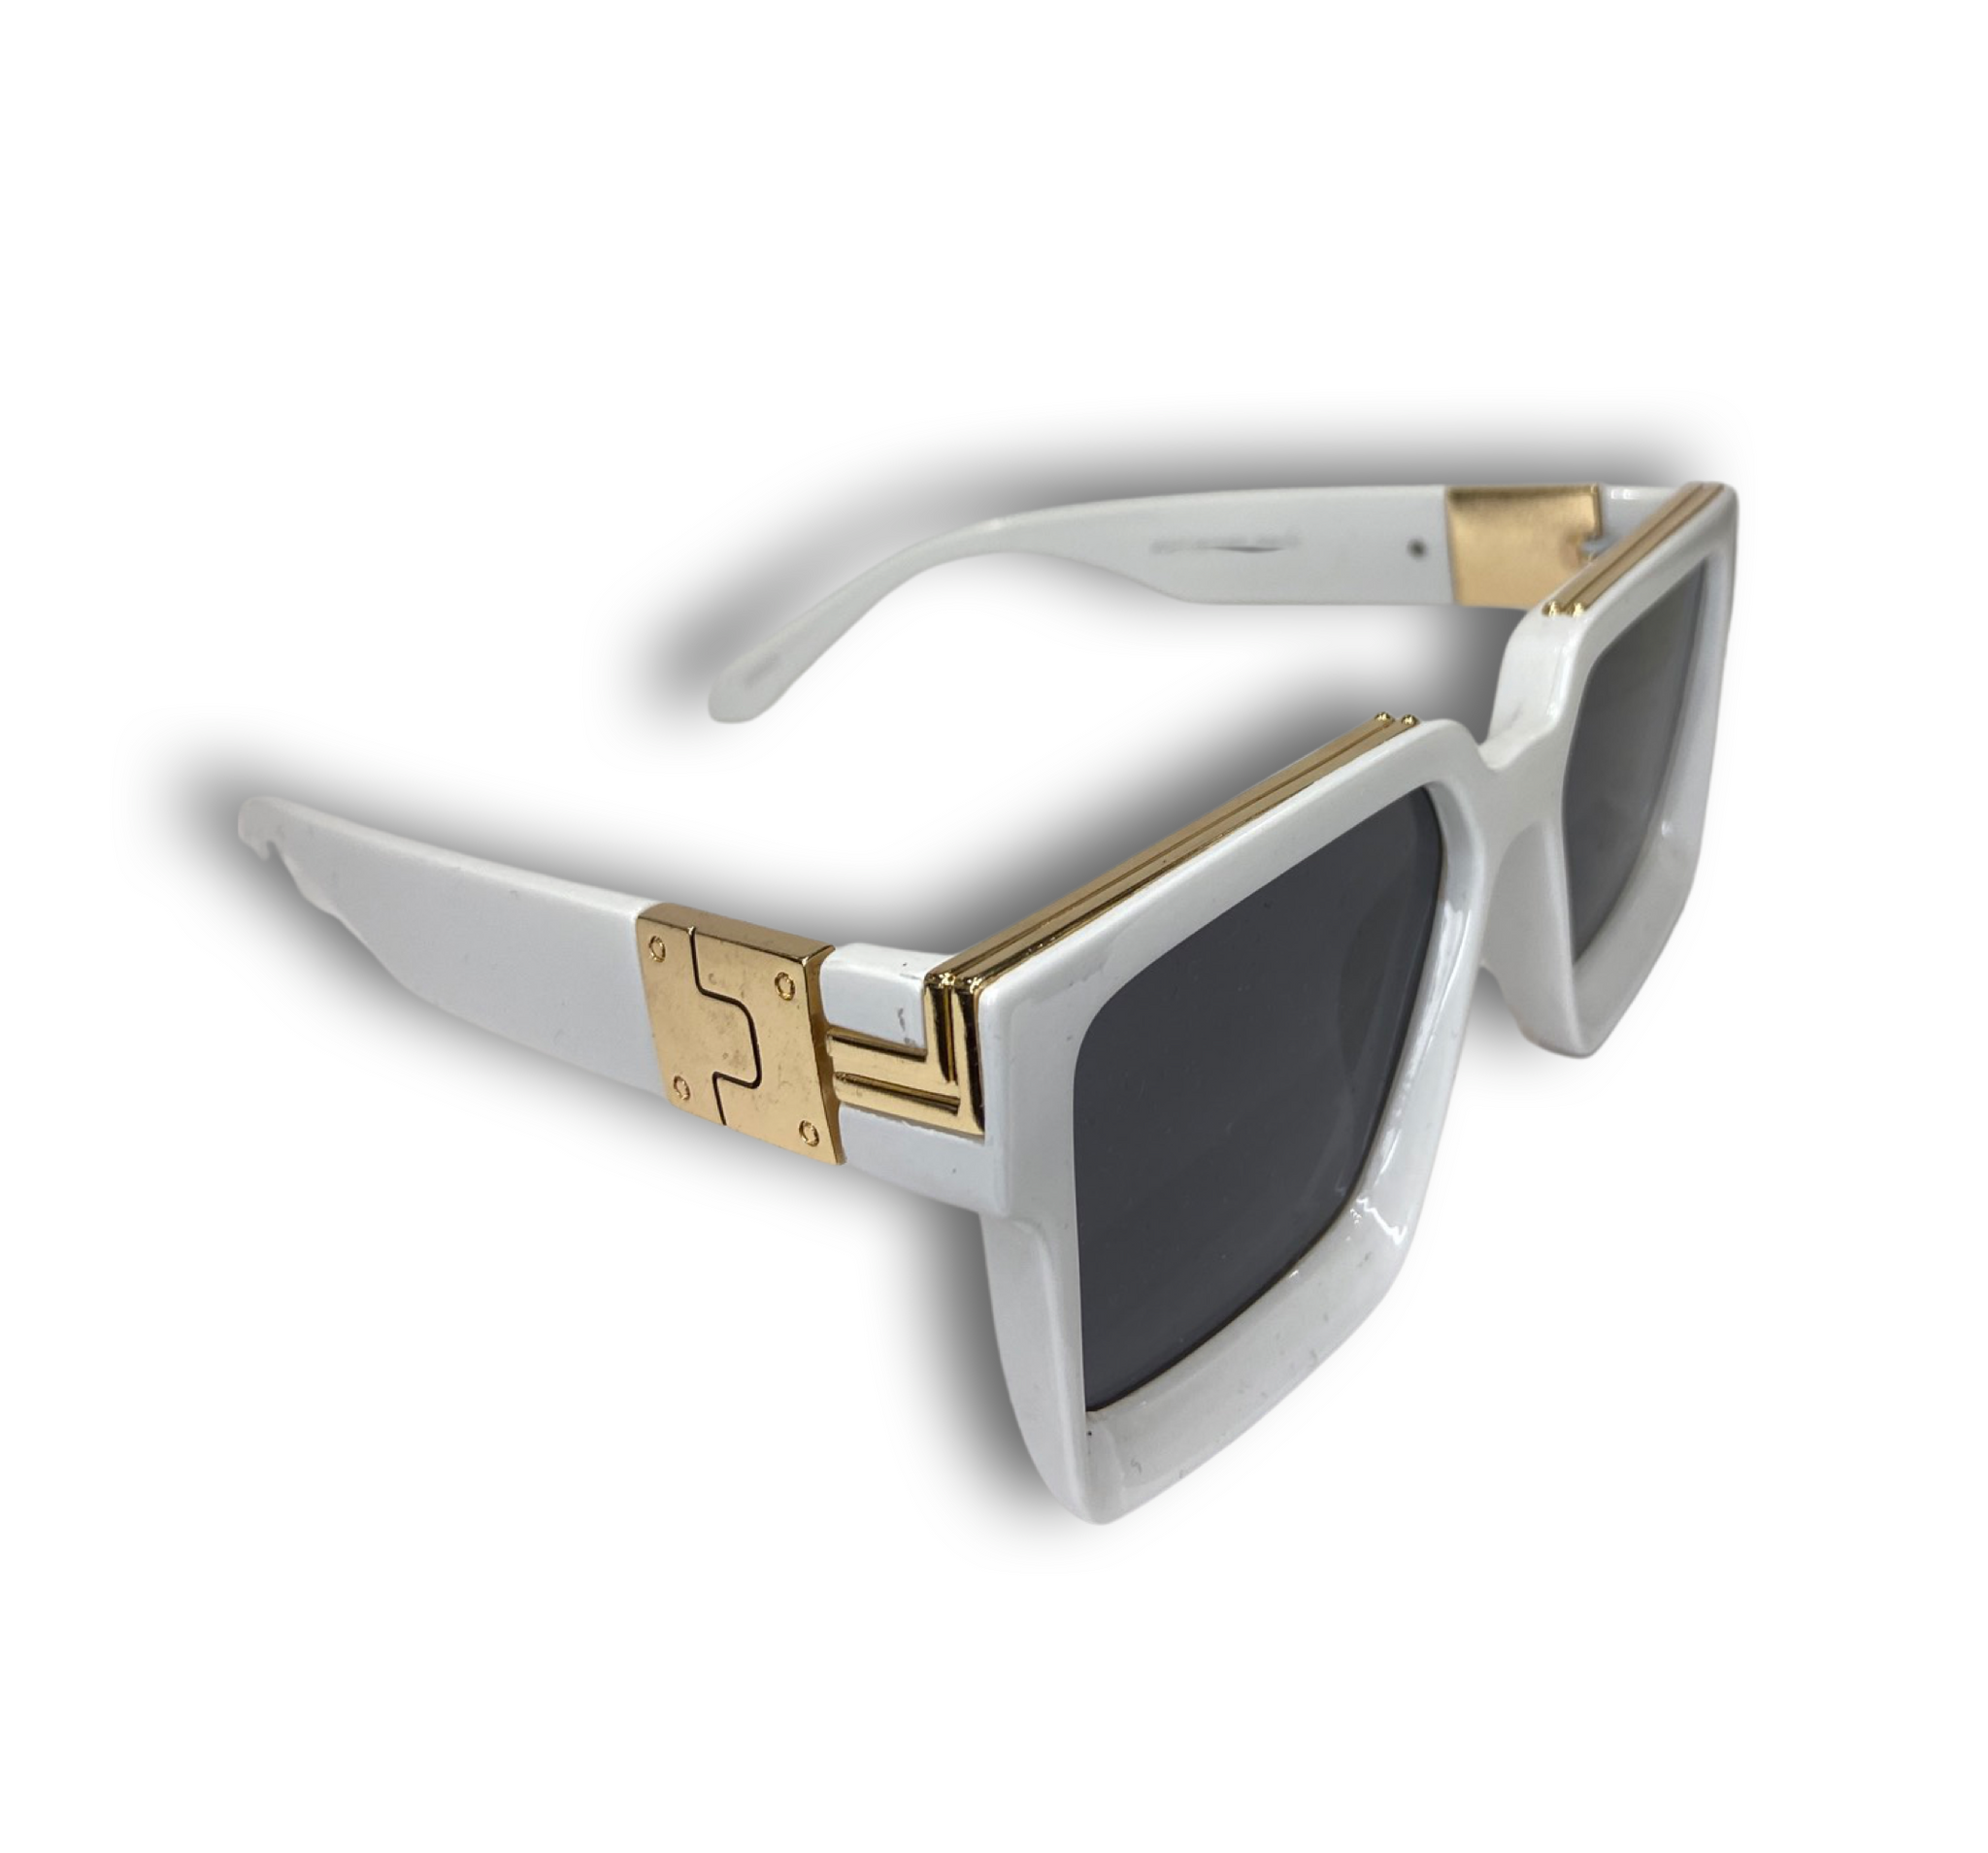 Luxury Millionaire Sunglasses